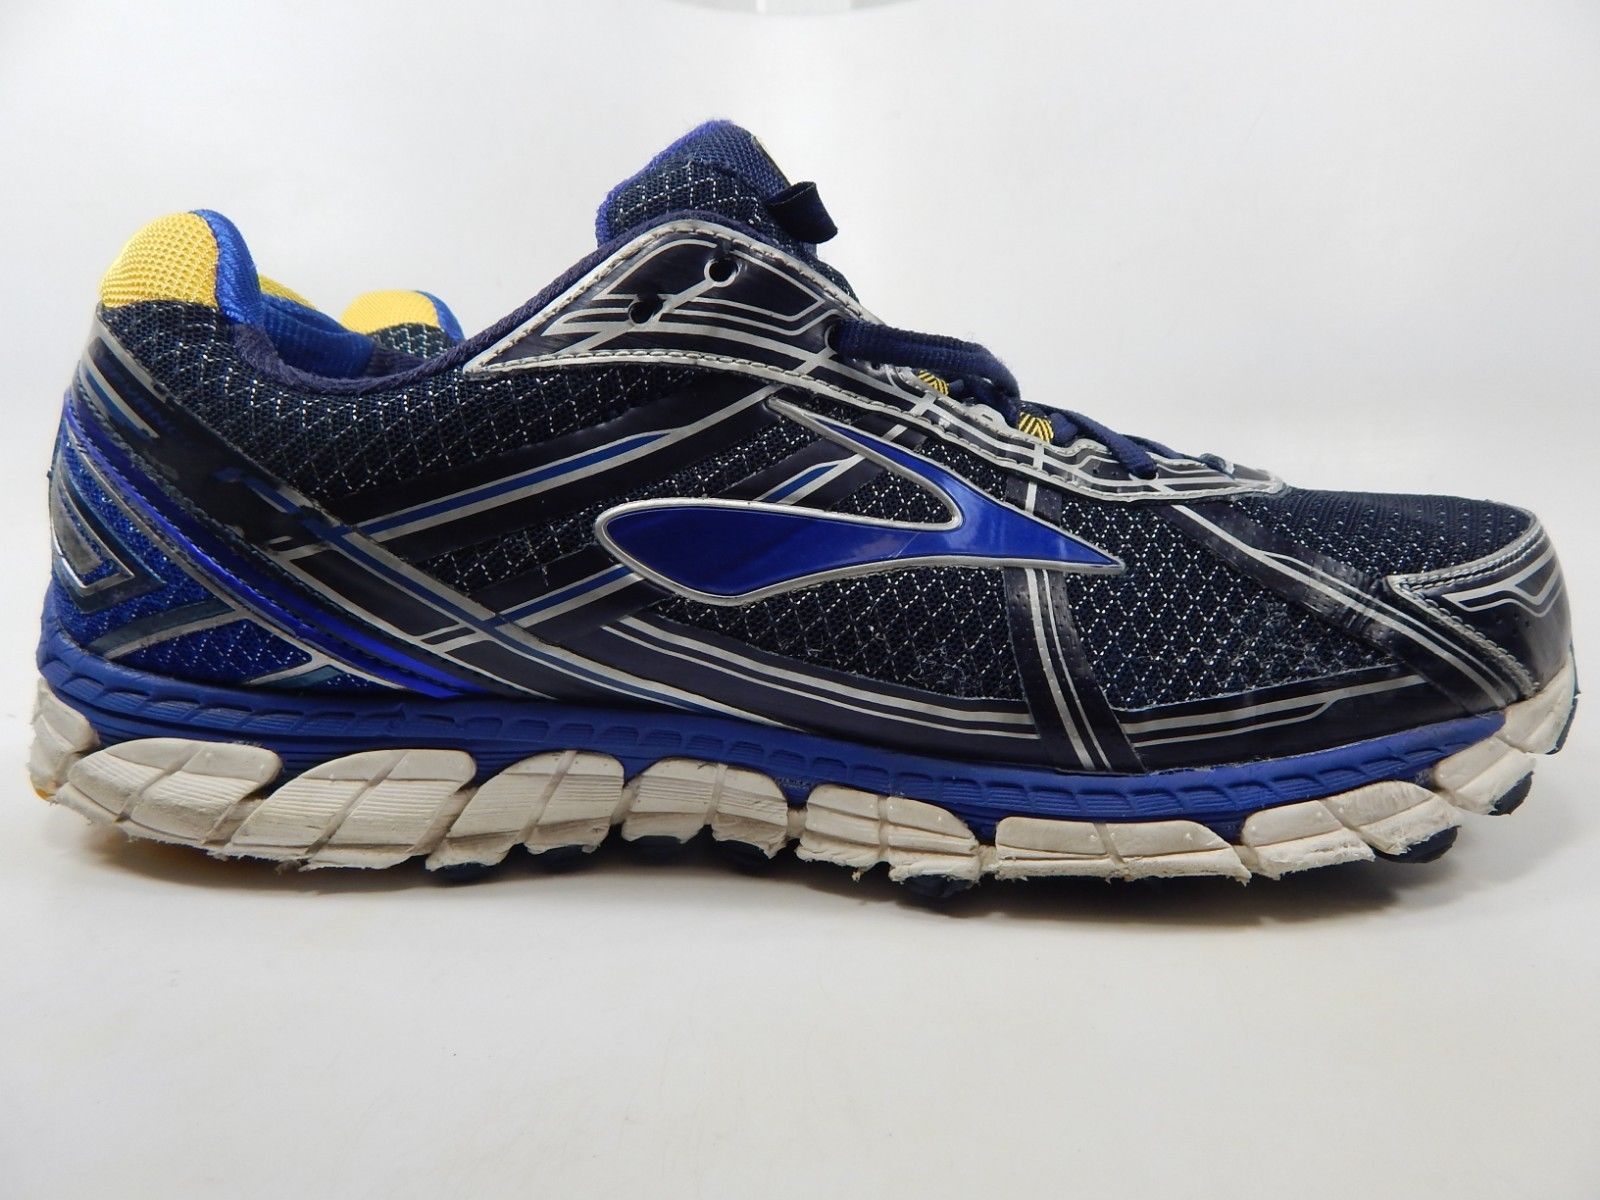 Brooks Defyance 9 Size 12.5 M (D) EU 46.5 Men's Running Shoes Blue ...